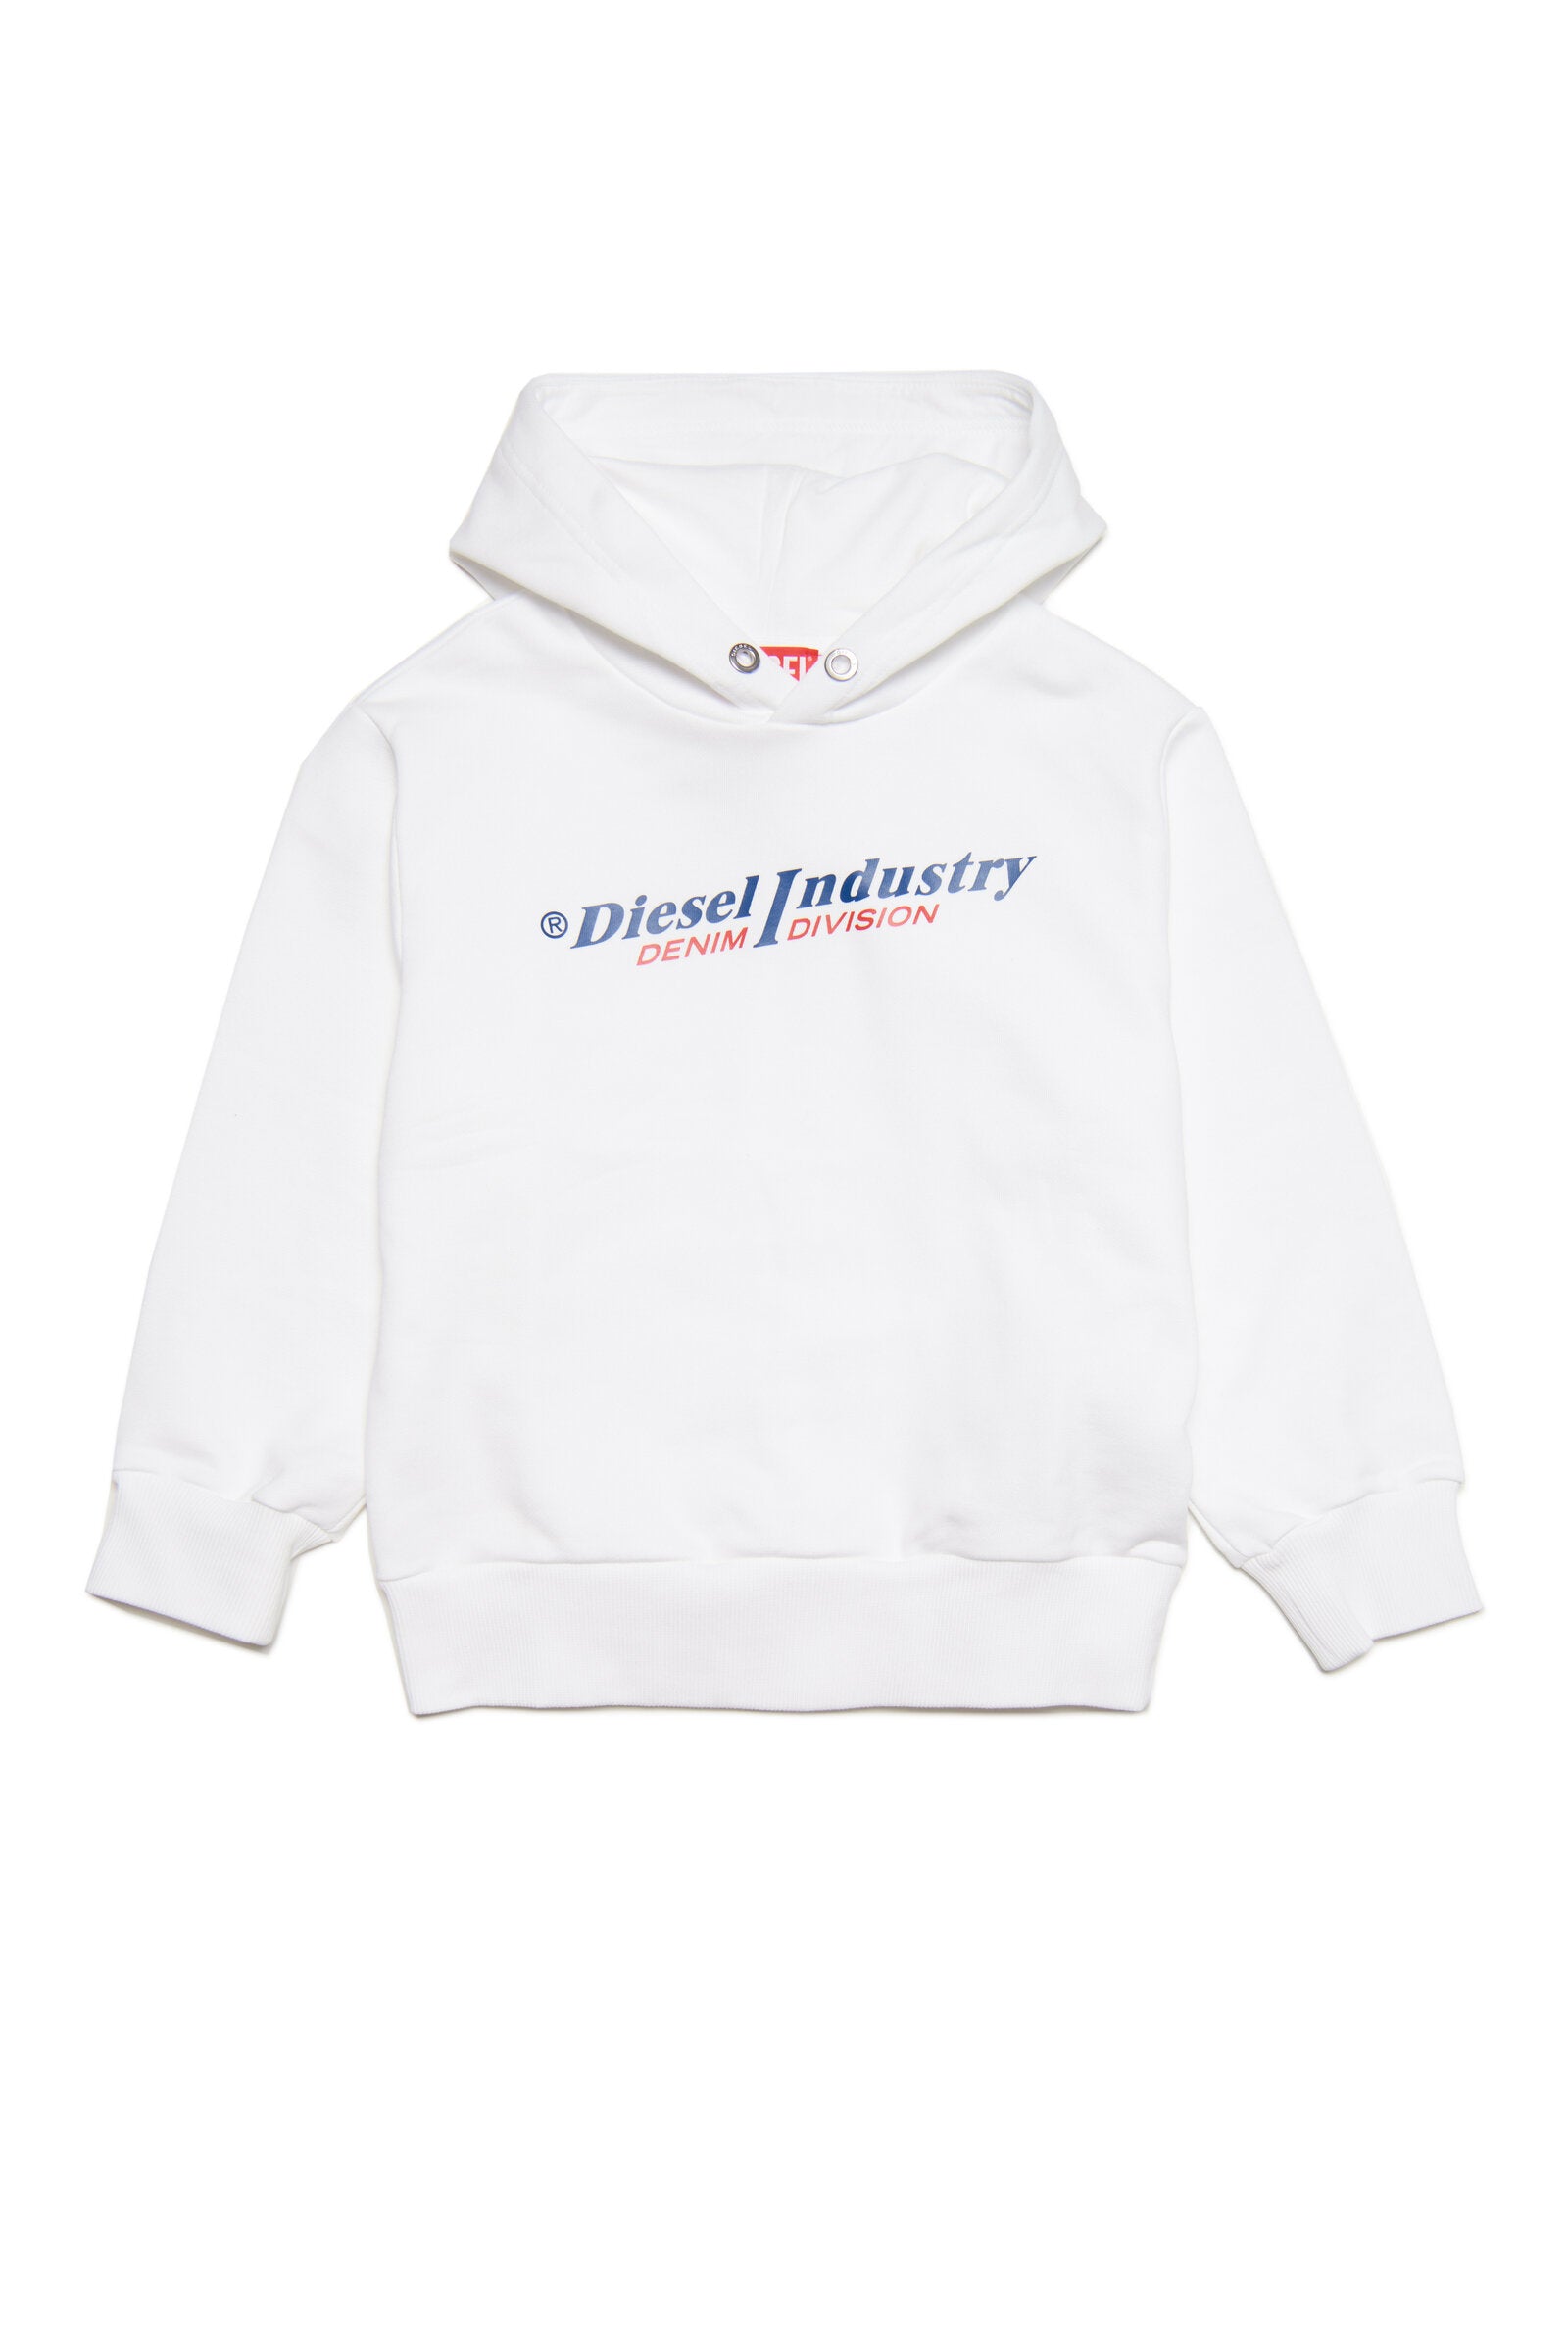 white hooded sweatshirt with "Diesel industry, Denim Division" logo for children Kid